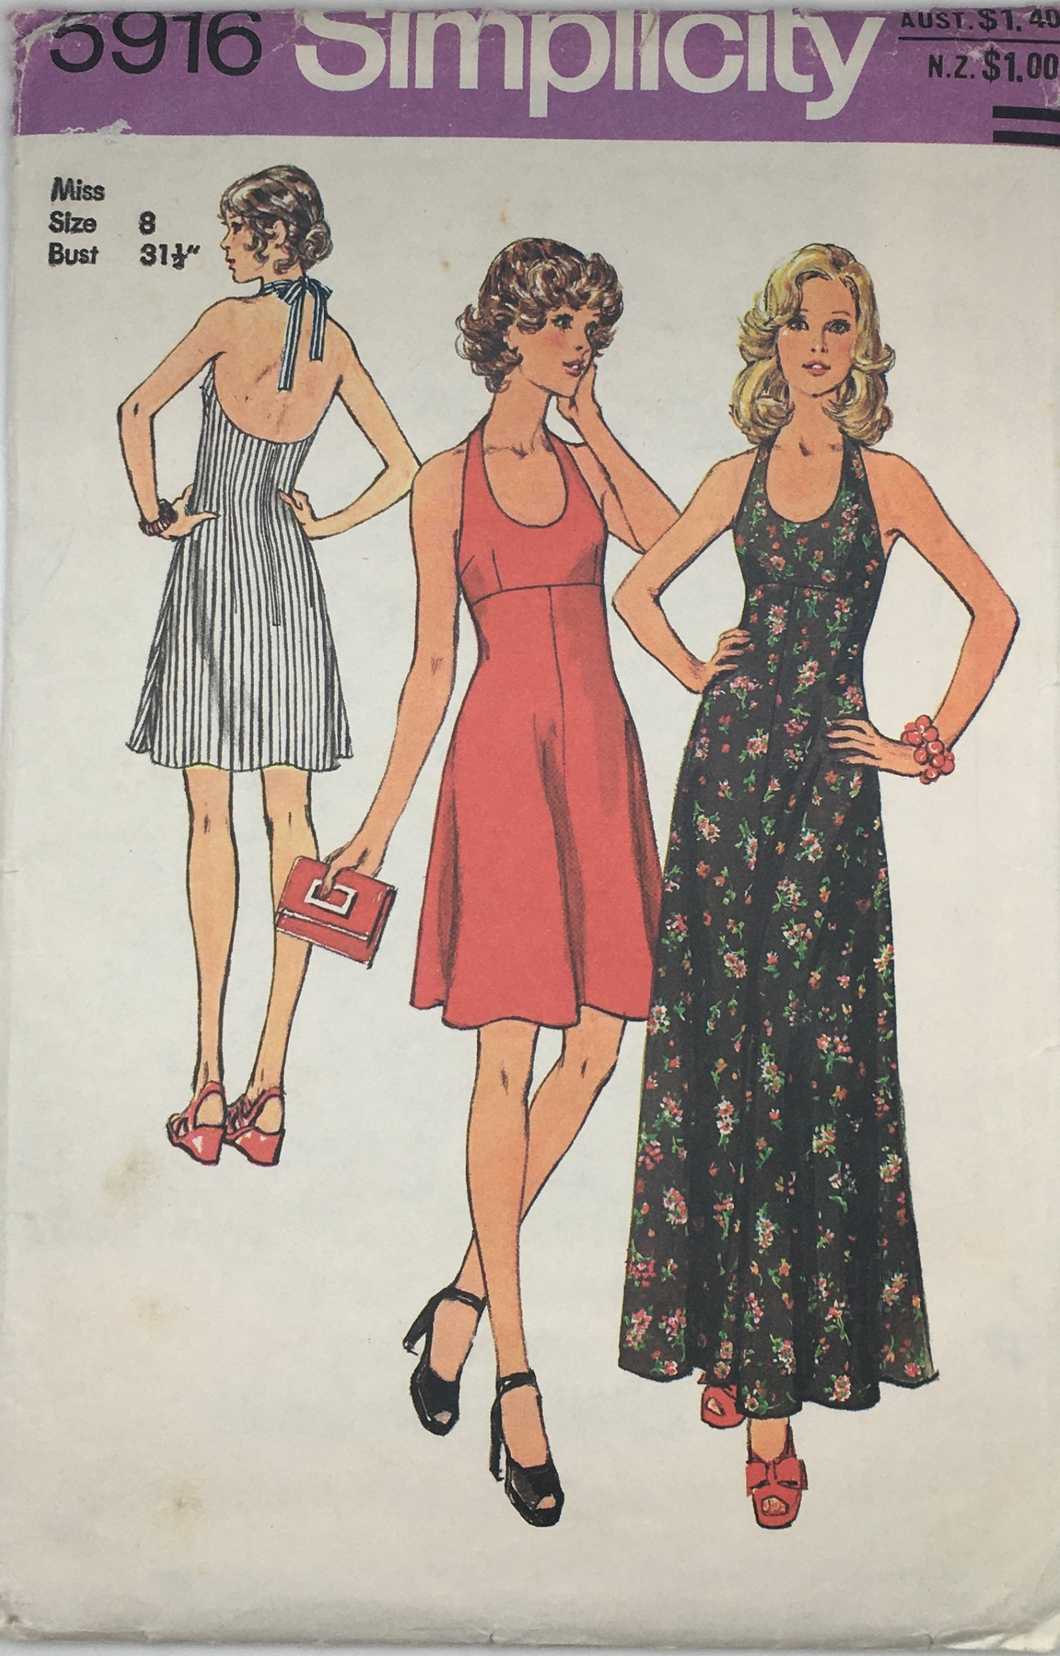 1973 Vintage Sewing Pattern: Simplicity 5916